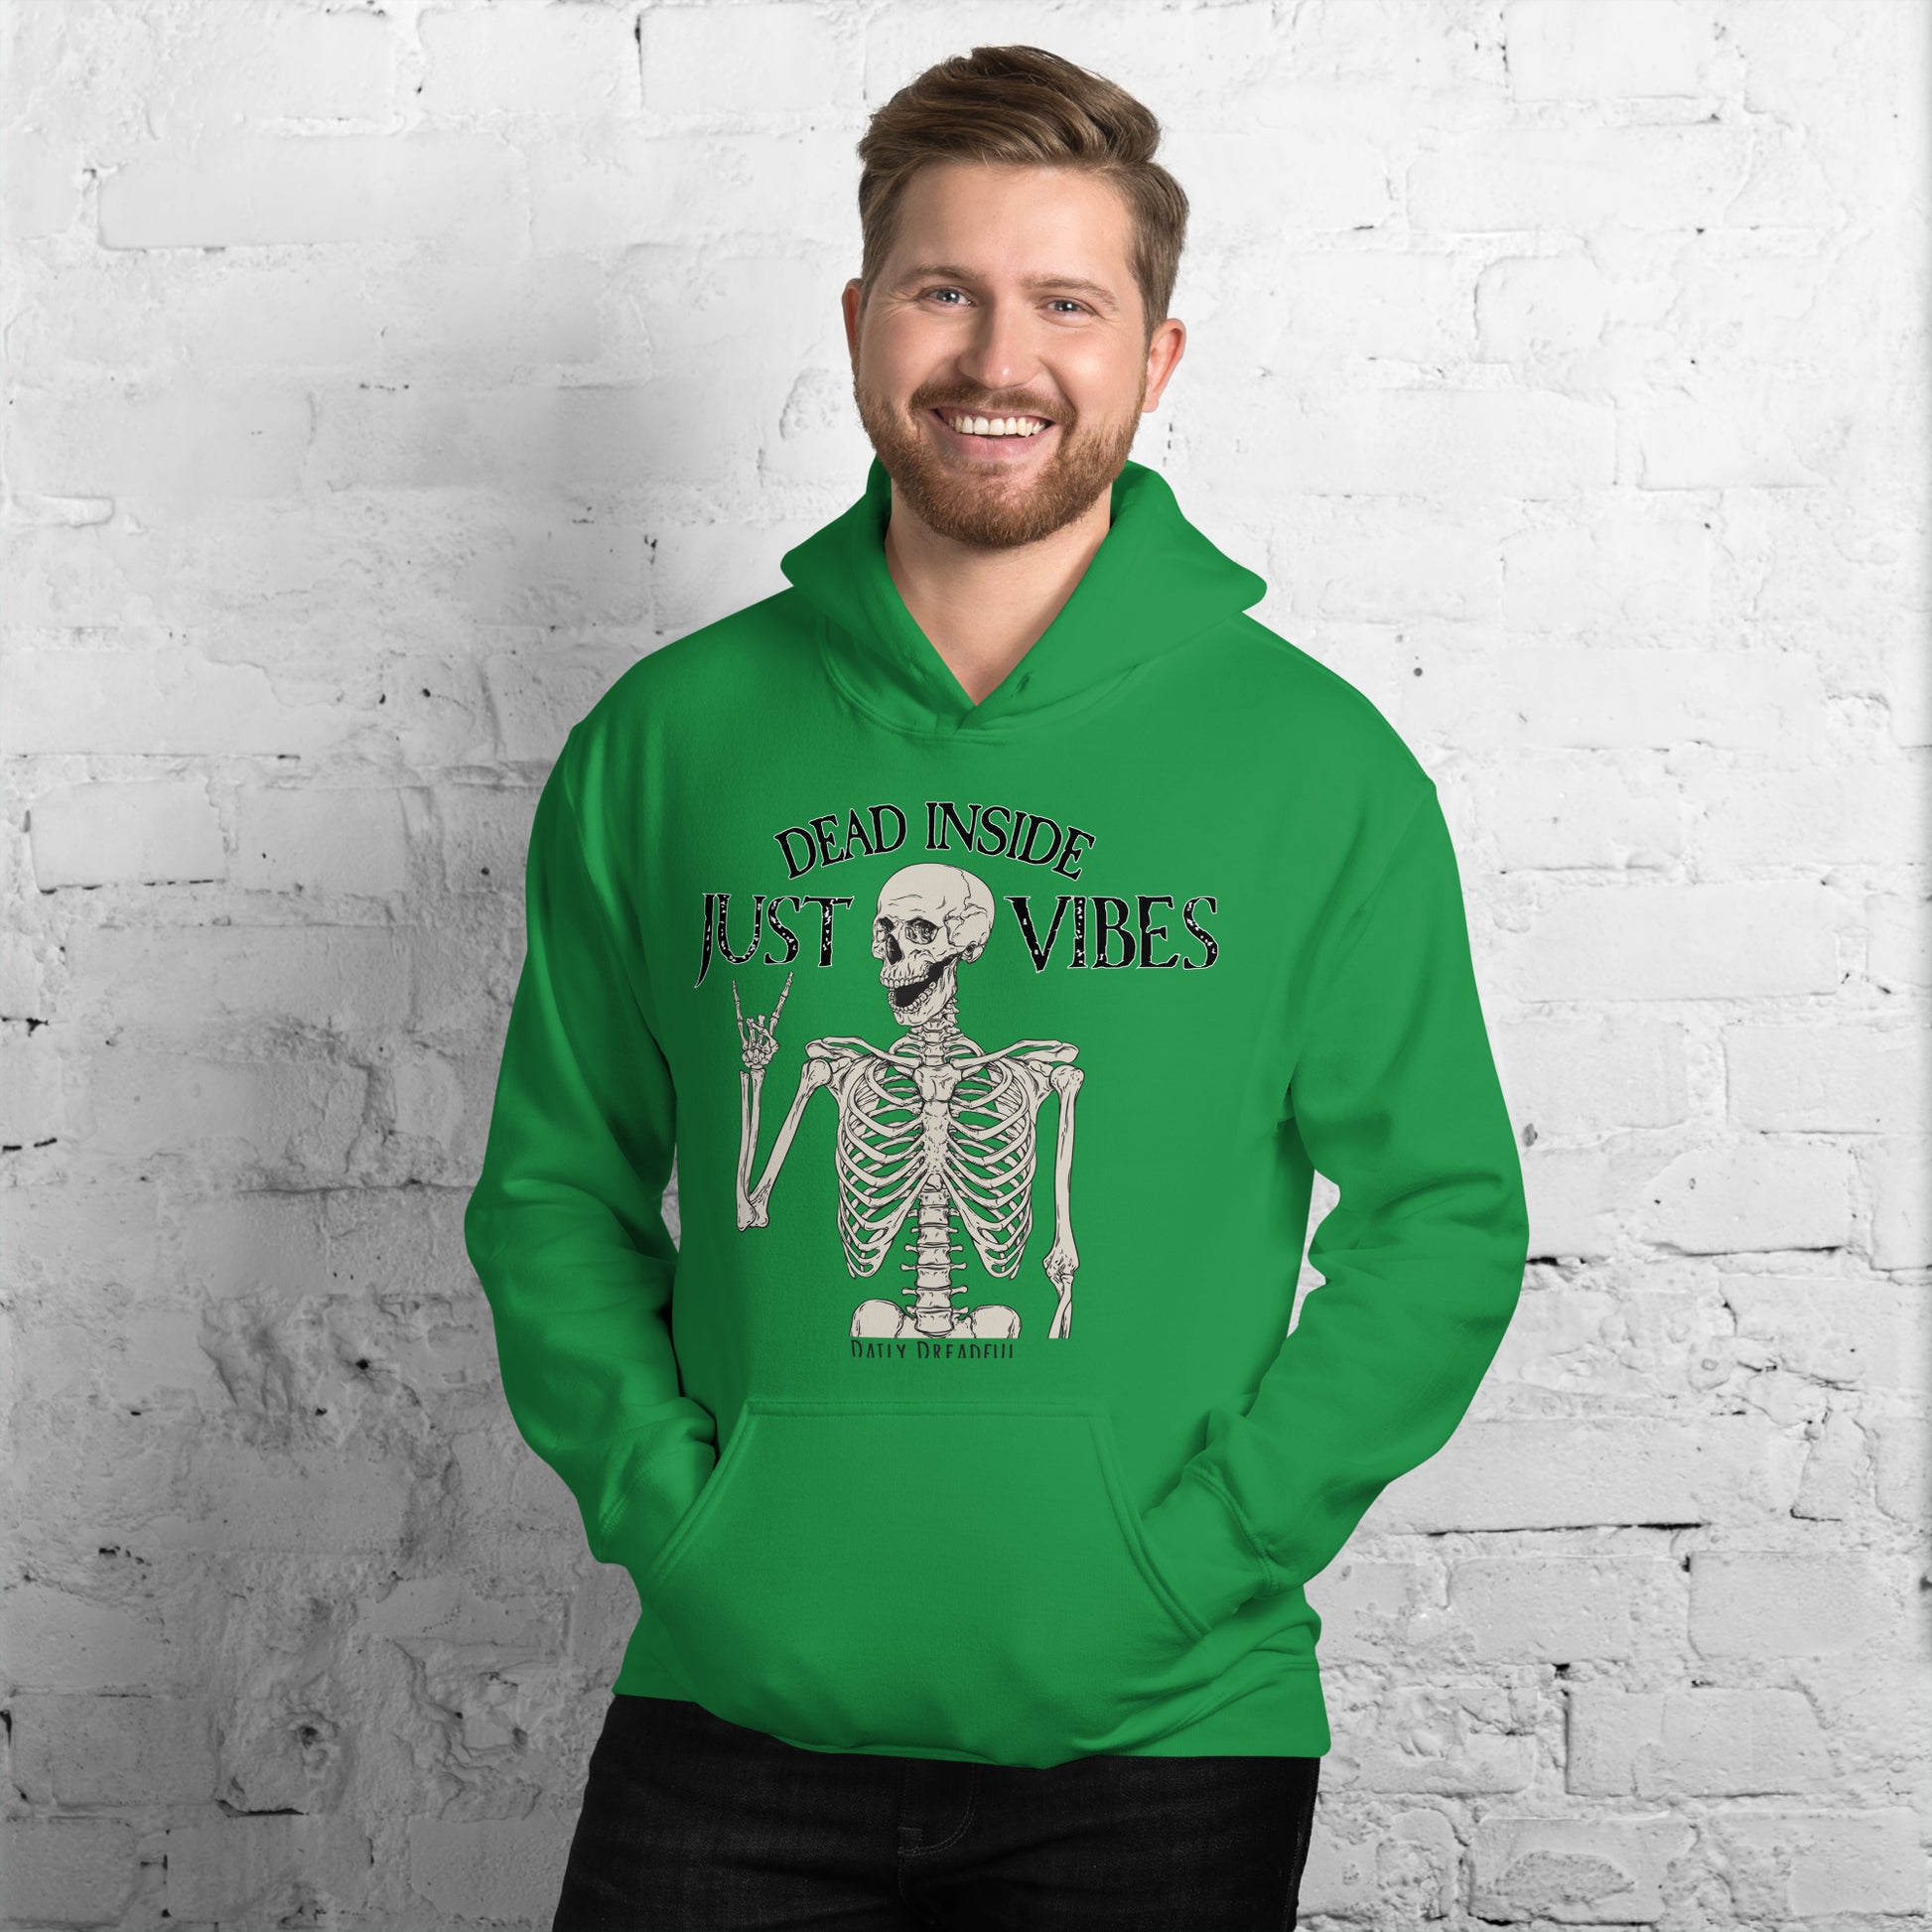 Irish green unisex hoodie just vibes skeleton